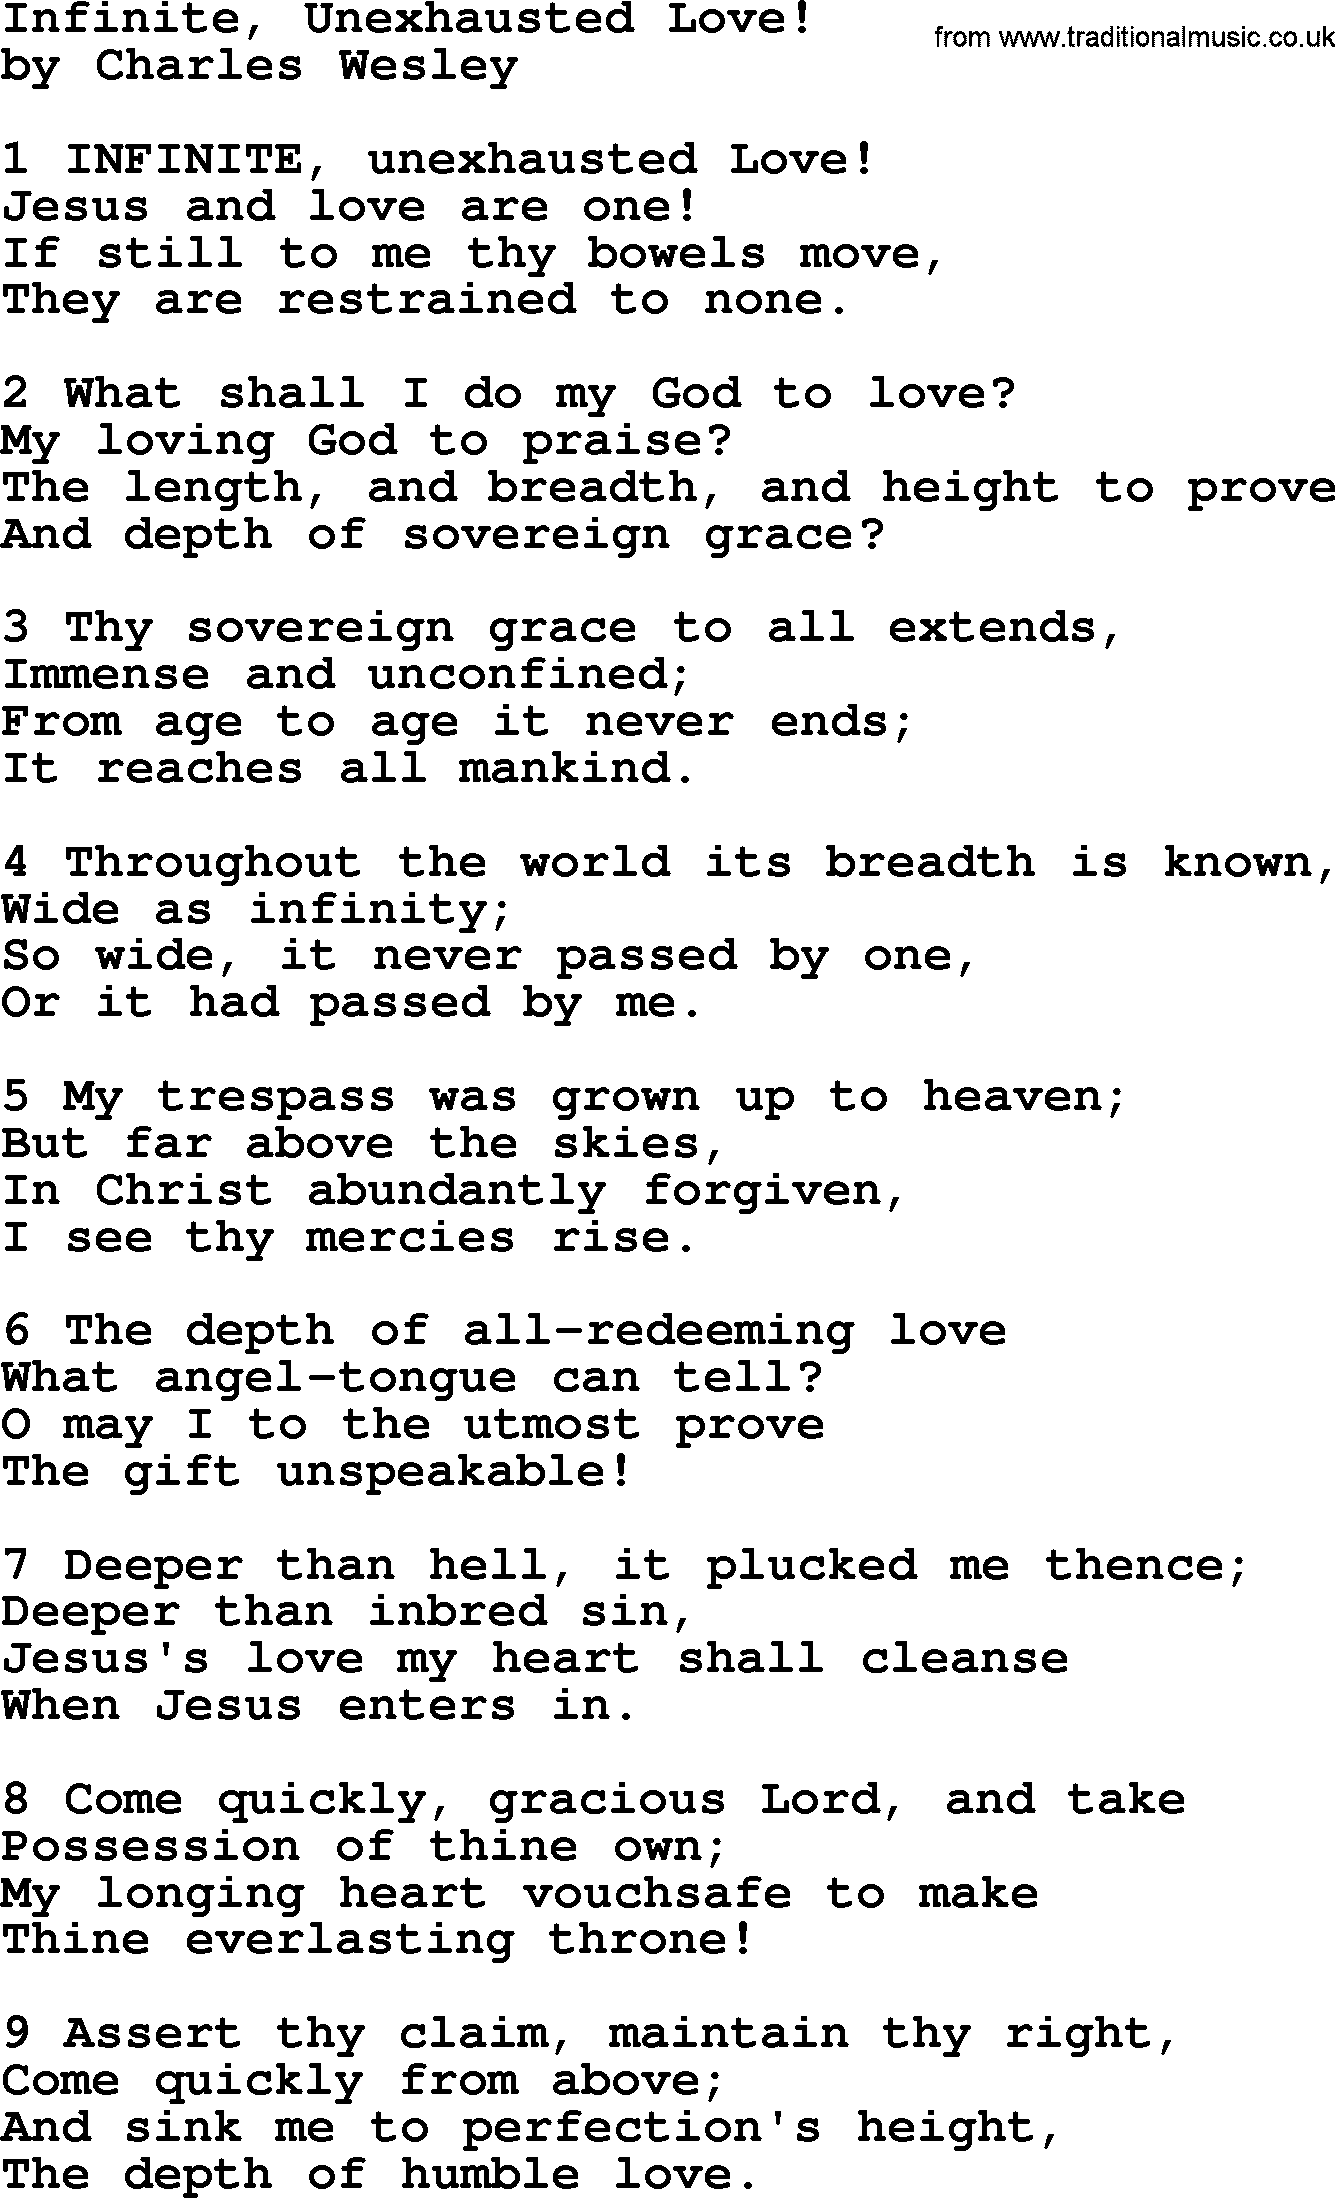 Charles Wesley hymn: Infinite, Unexhausted Love!, lyrics